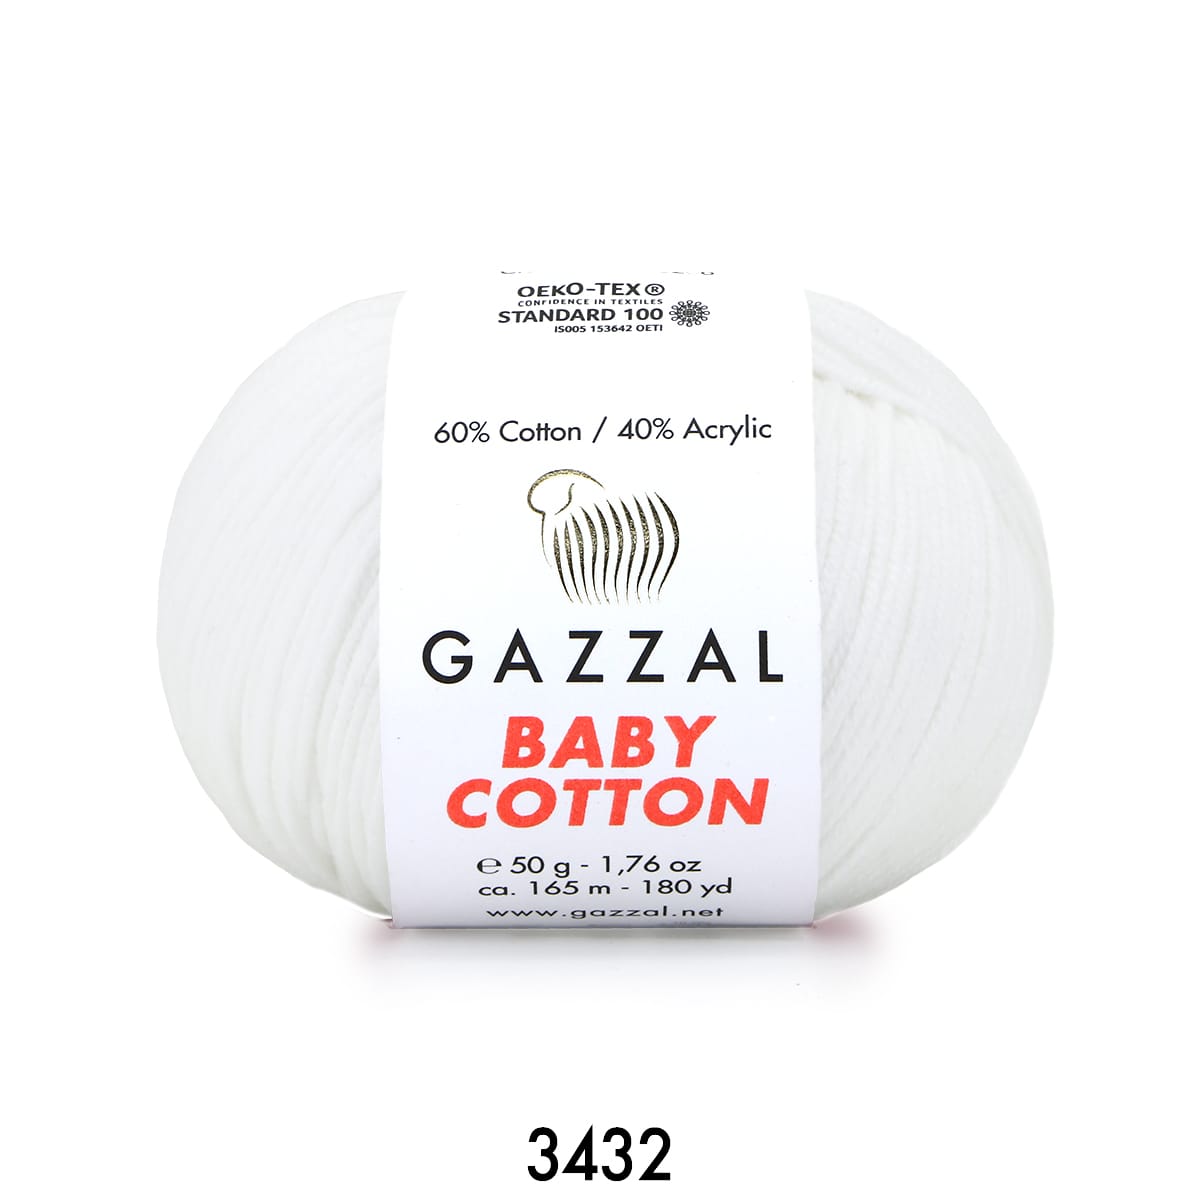 Gazzal Baby Cotton 3432